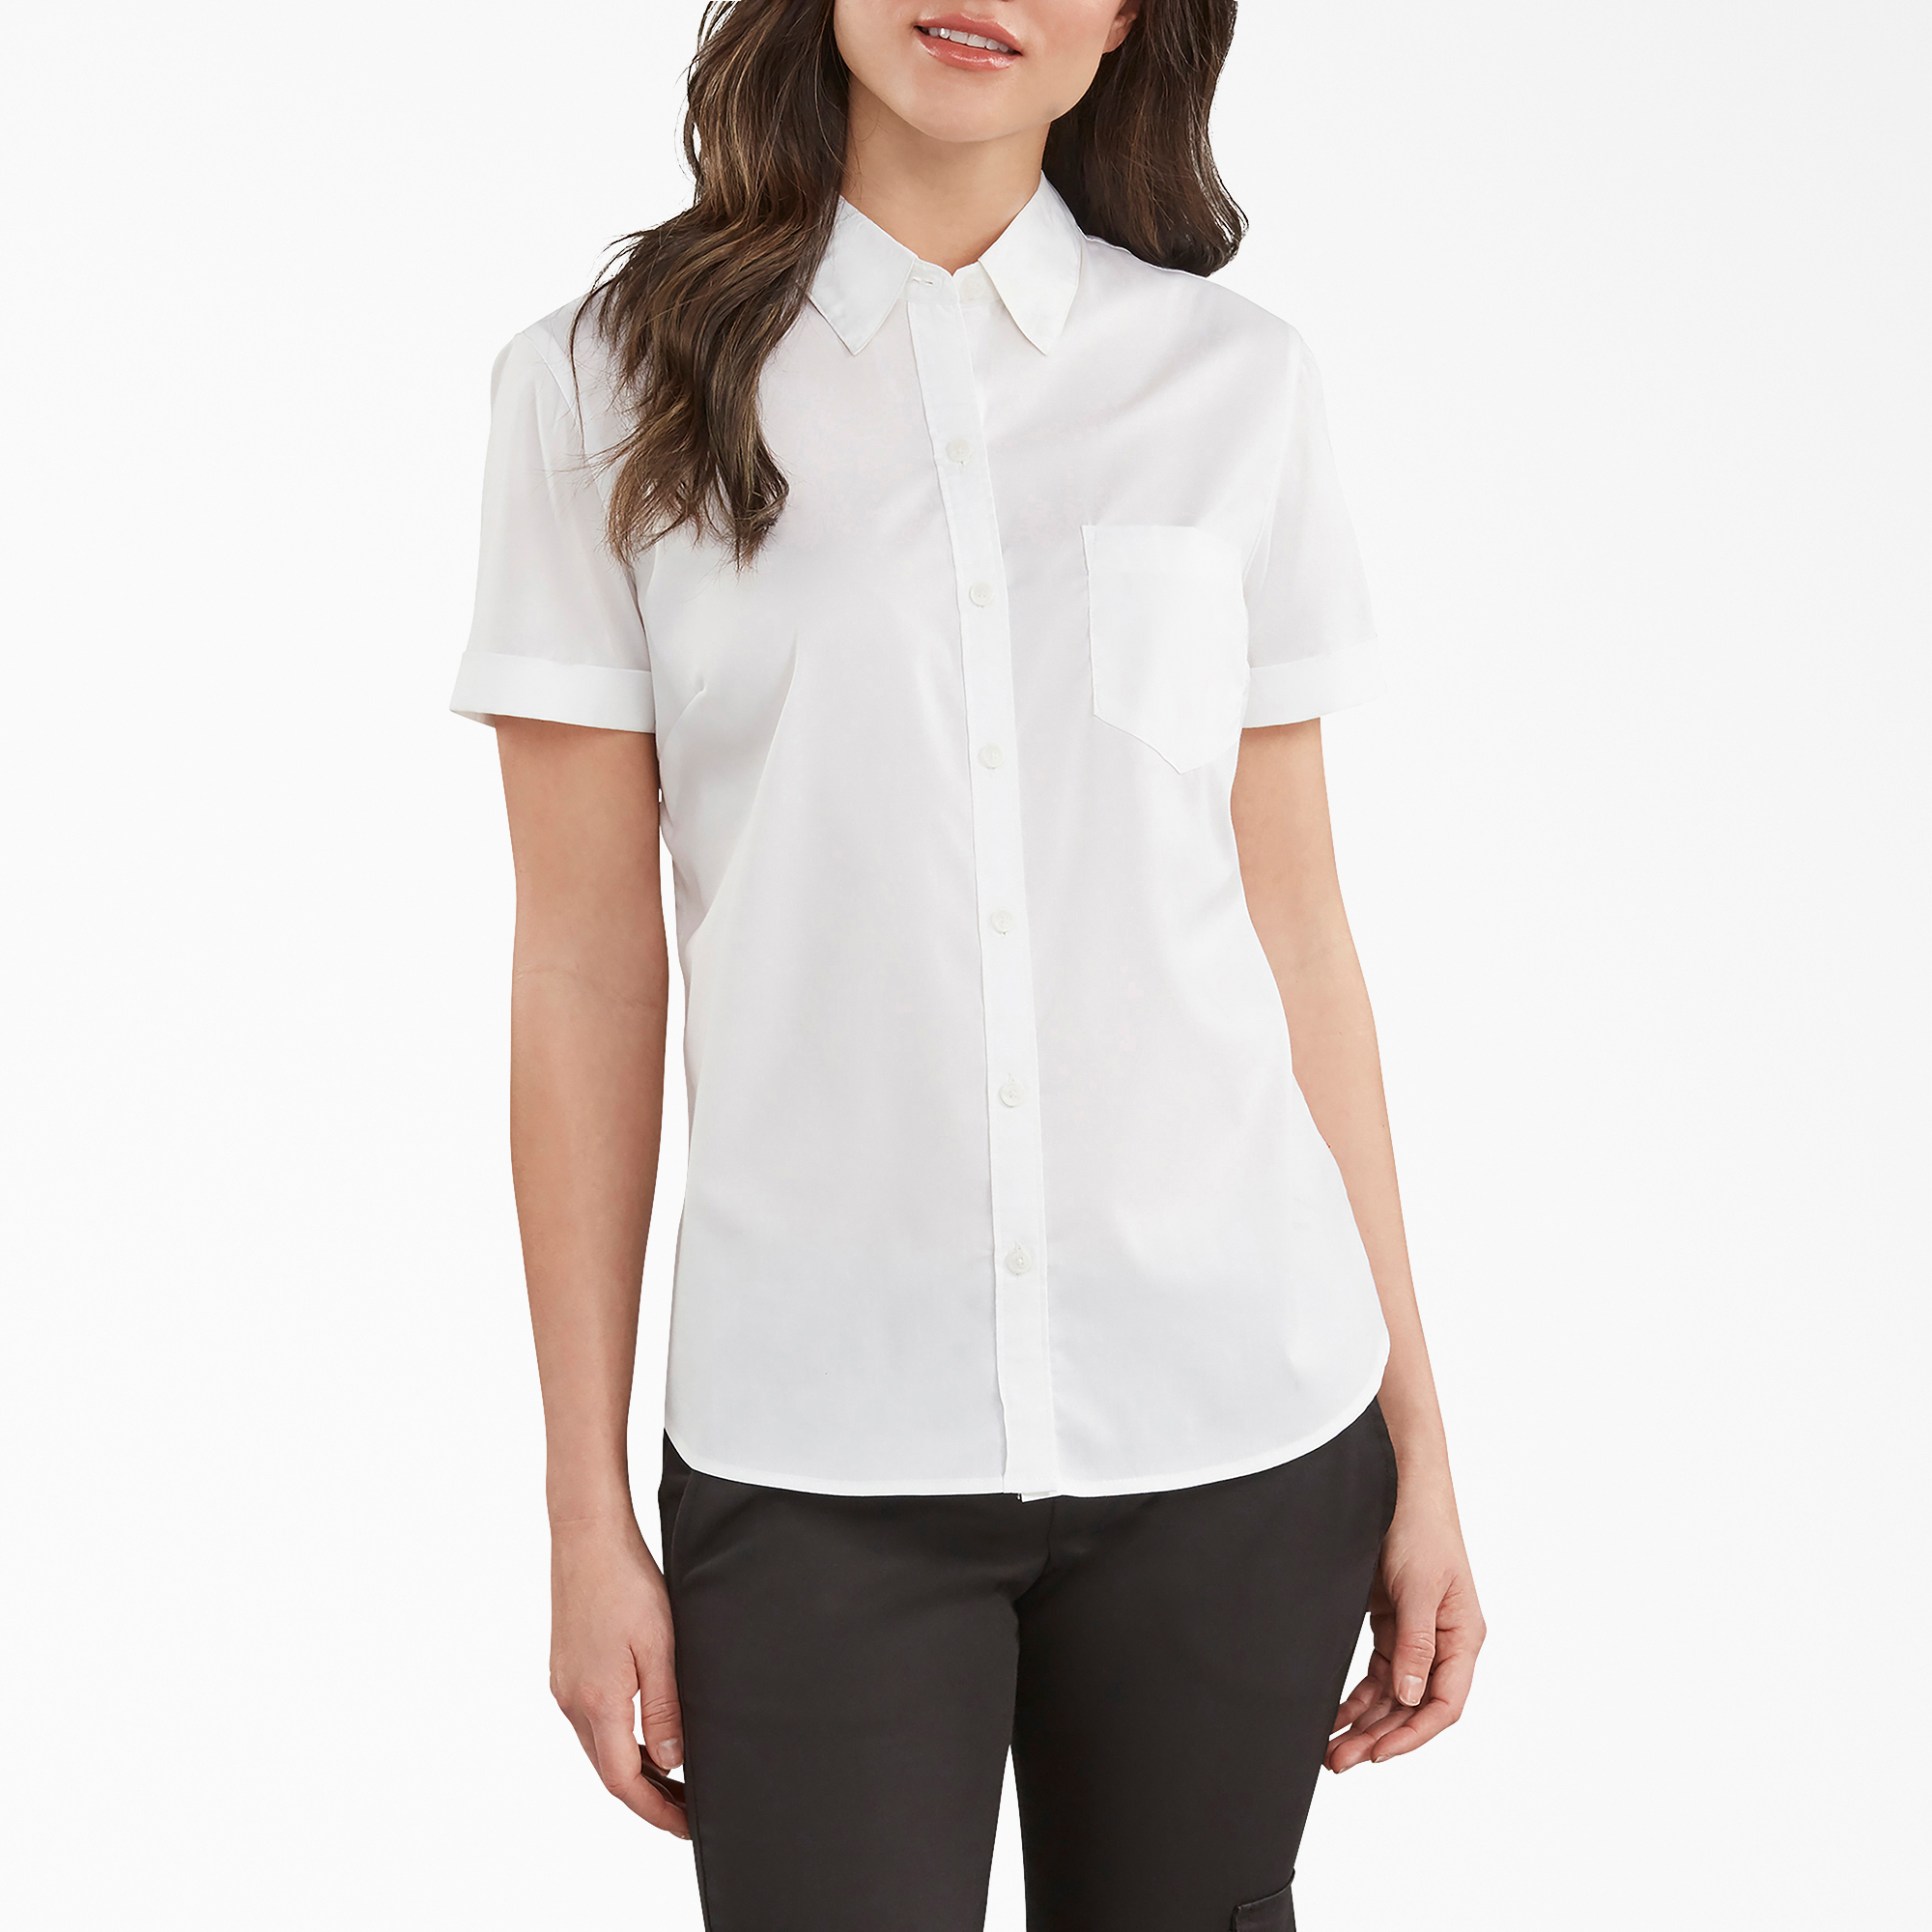 Women's Tops - Shirts for Women, Polos, T Shirts & Work Shirts, White ...